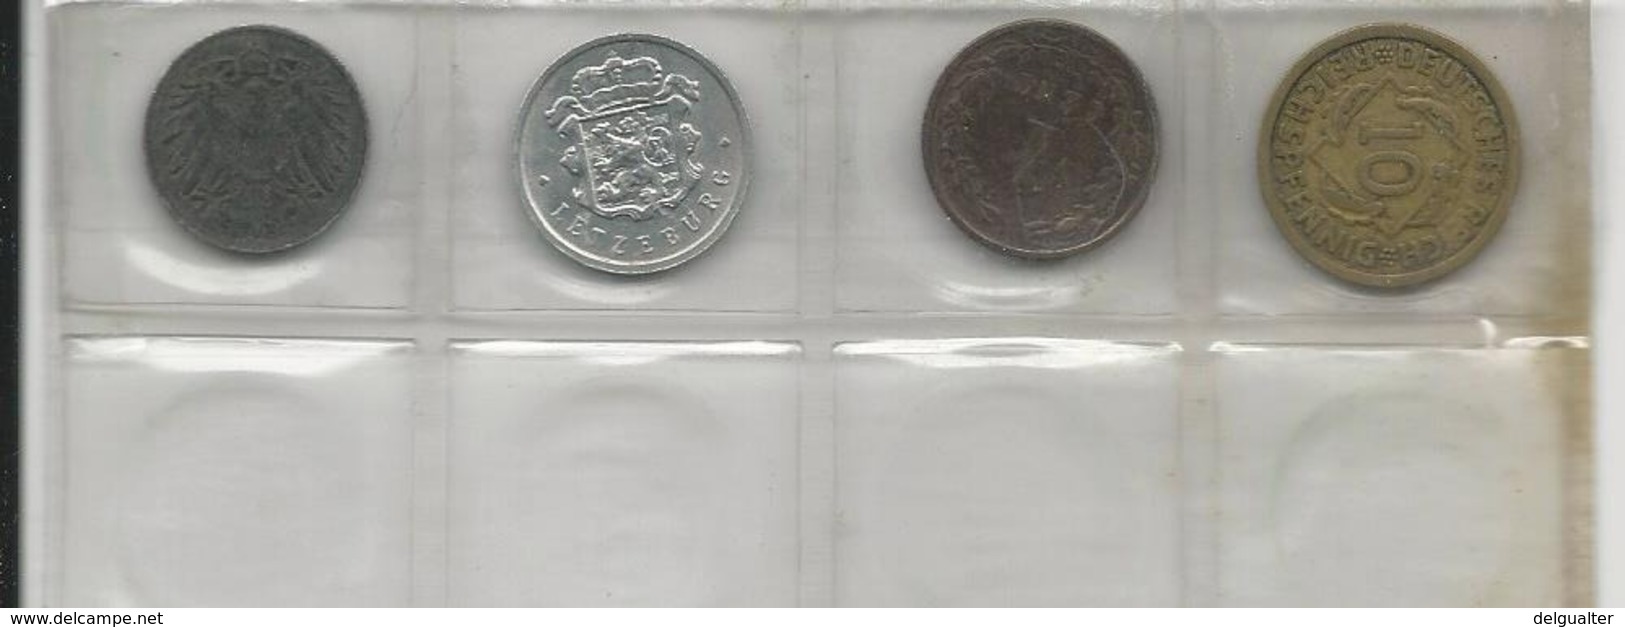 4 Coins - Mezclas - Monedas